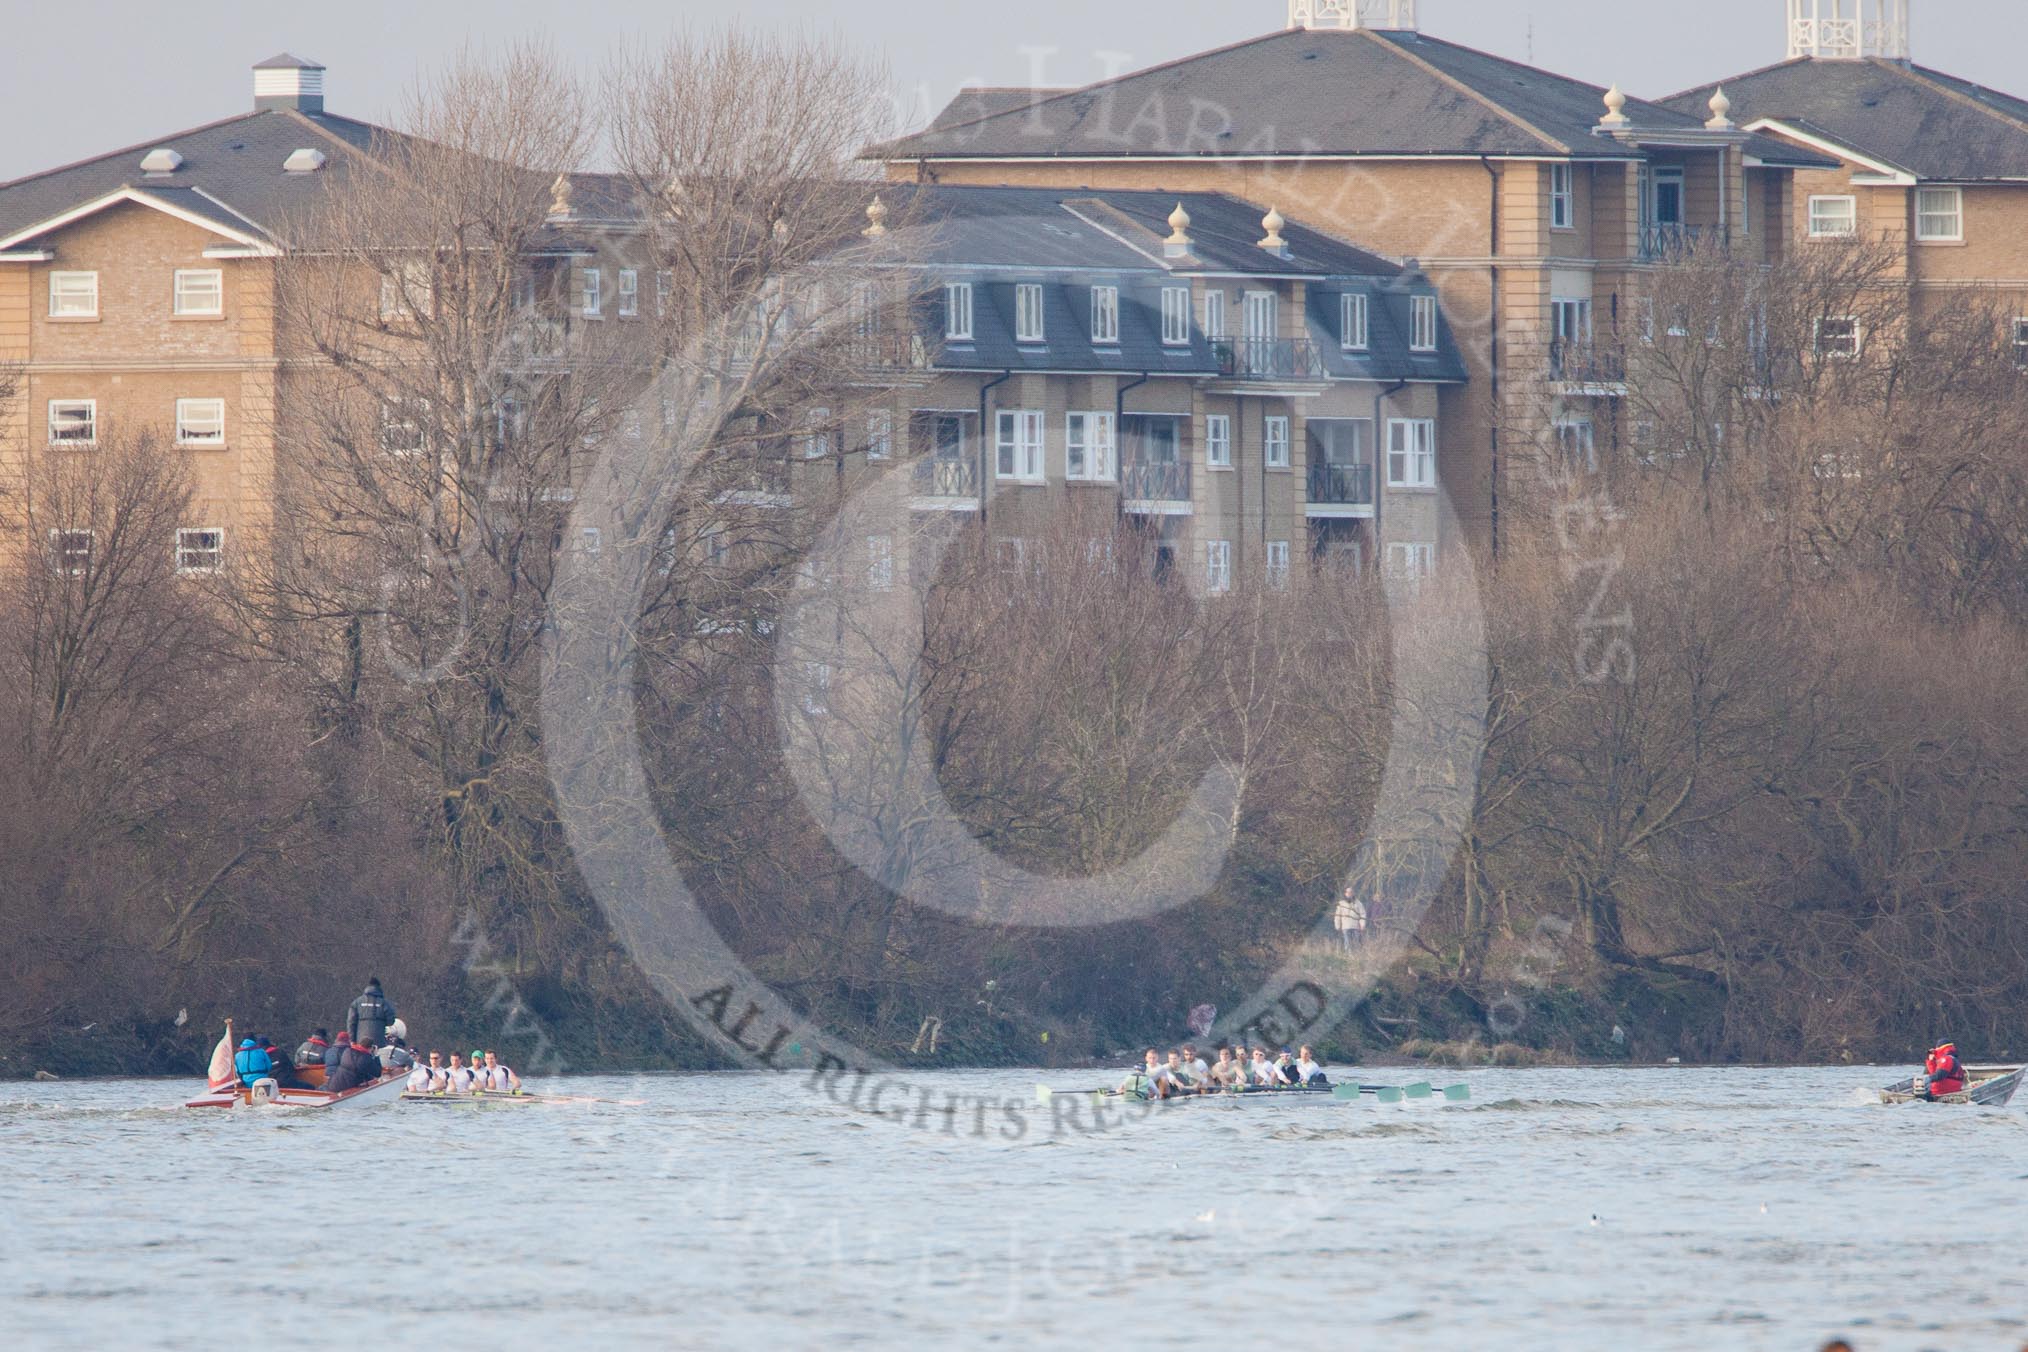 The Boat Race season 2013 - fixture CUBC vs Leander.
River Thames Tideway between Putney Bridge and Mortlake,
London SW15,

United Kingdom,
on 02 March 2013 at 16:00, image #167